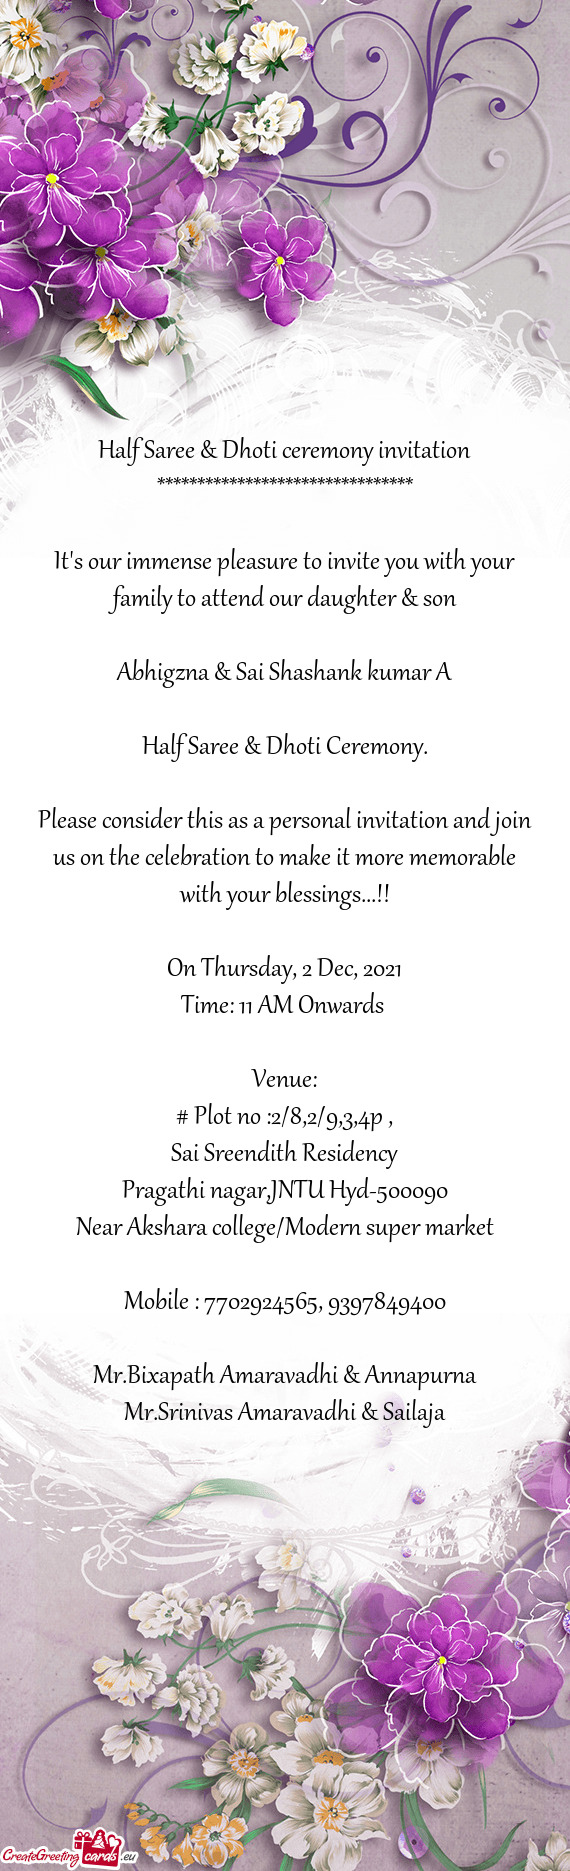 Half Saree & Dhoti Ceremony